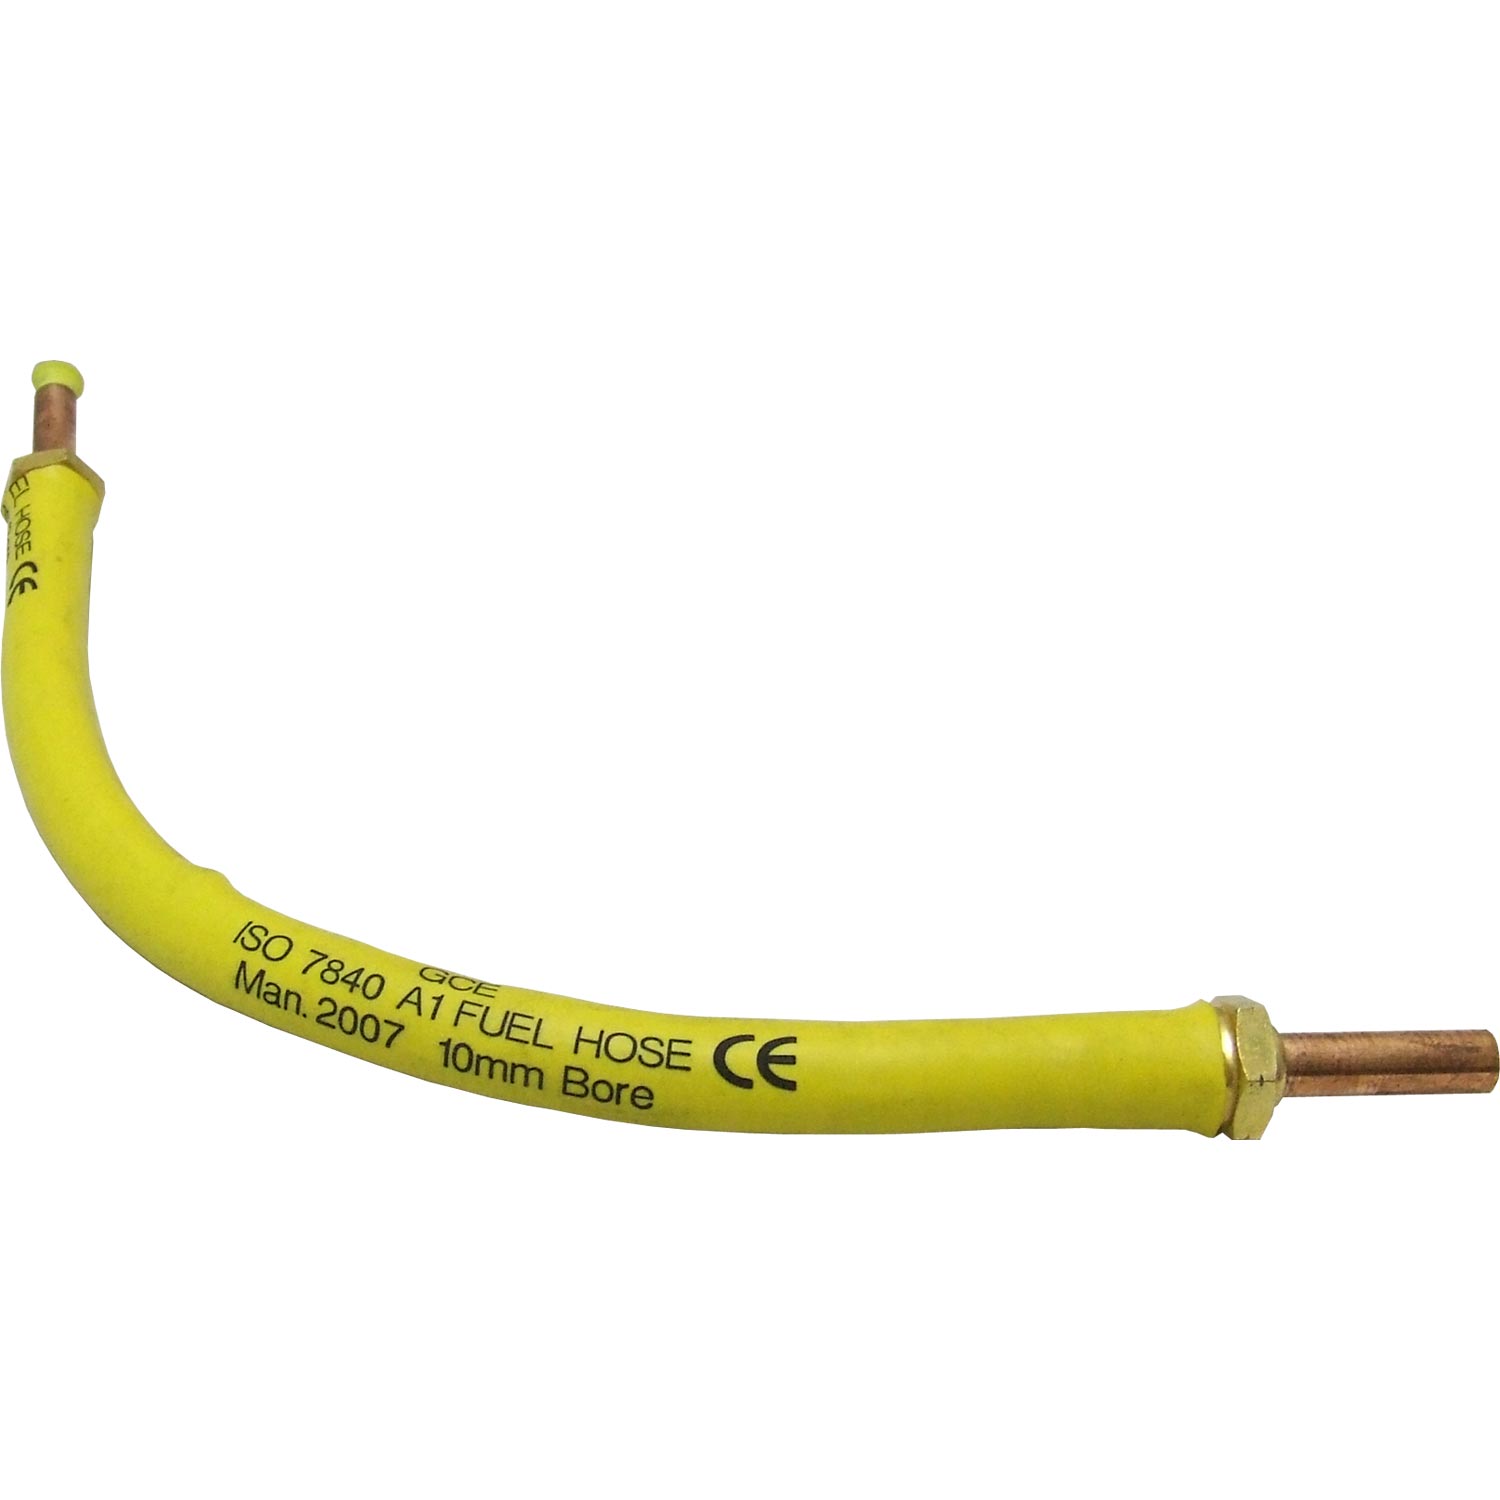 choose length  1-57799 Fire Resistant Marine fuel hose ISO7840 A1 5mm bore 